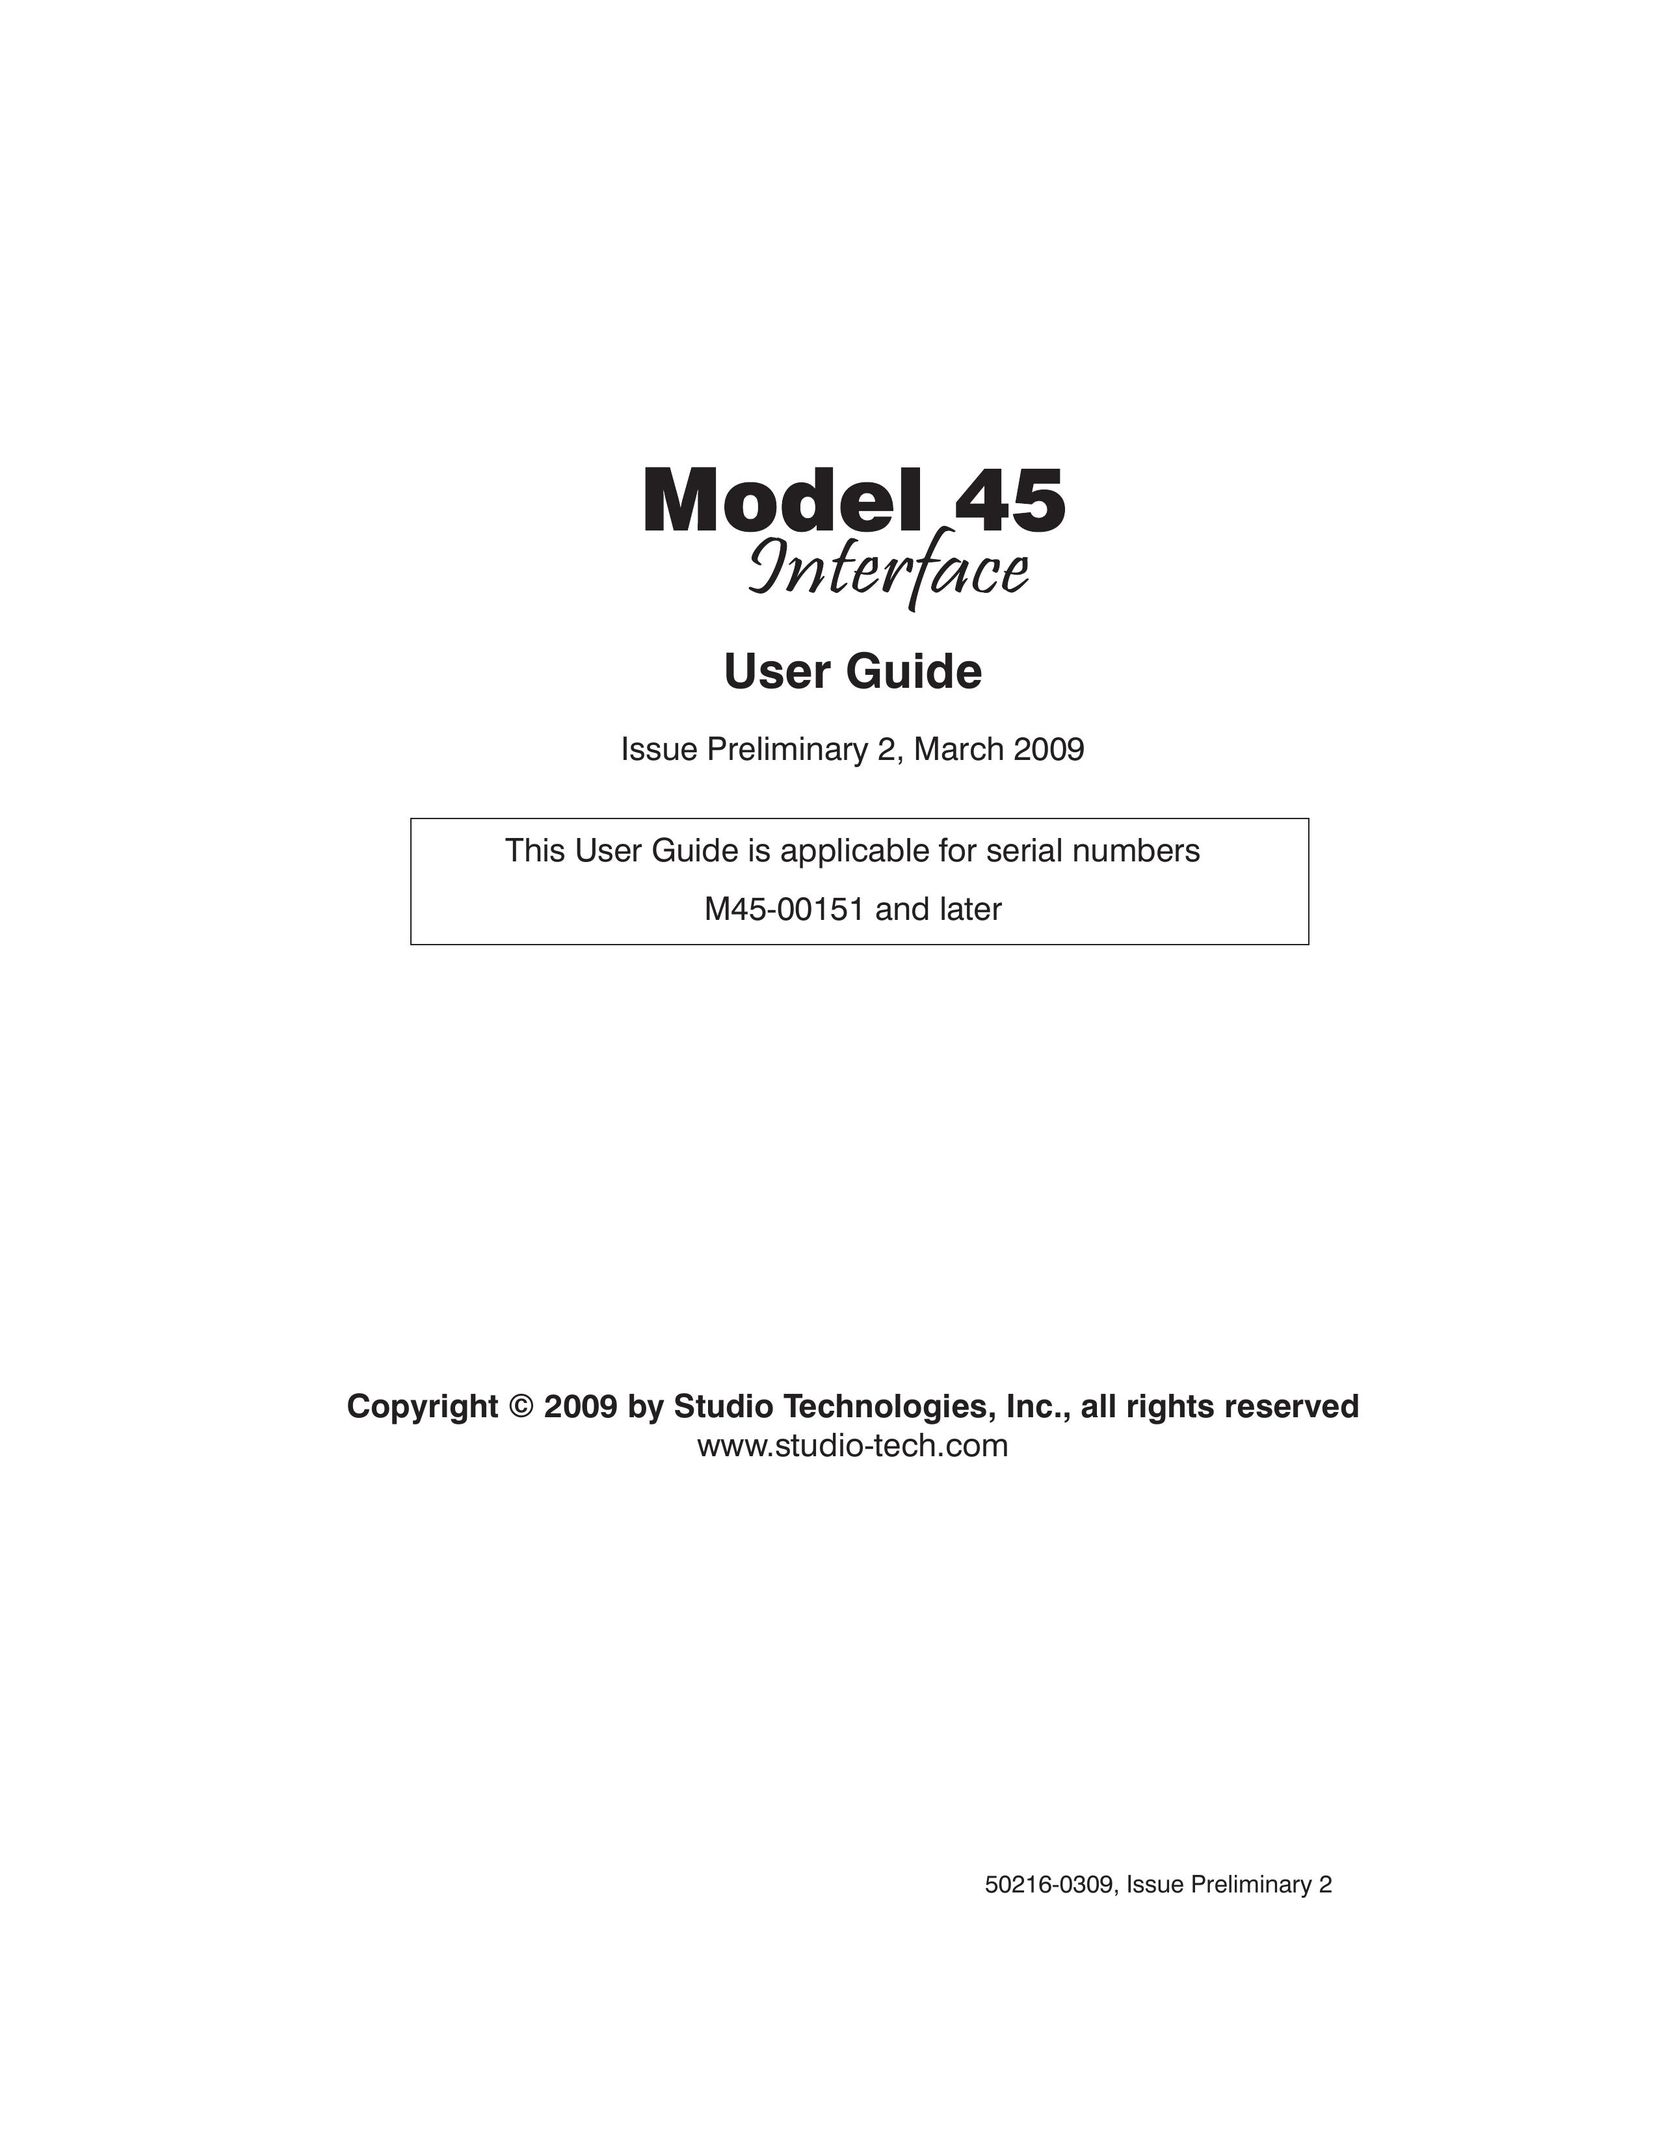 StudioTech M45-00151 Intercom System User Manual